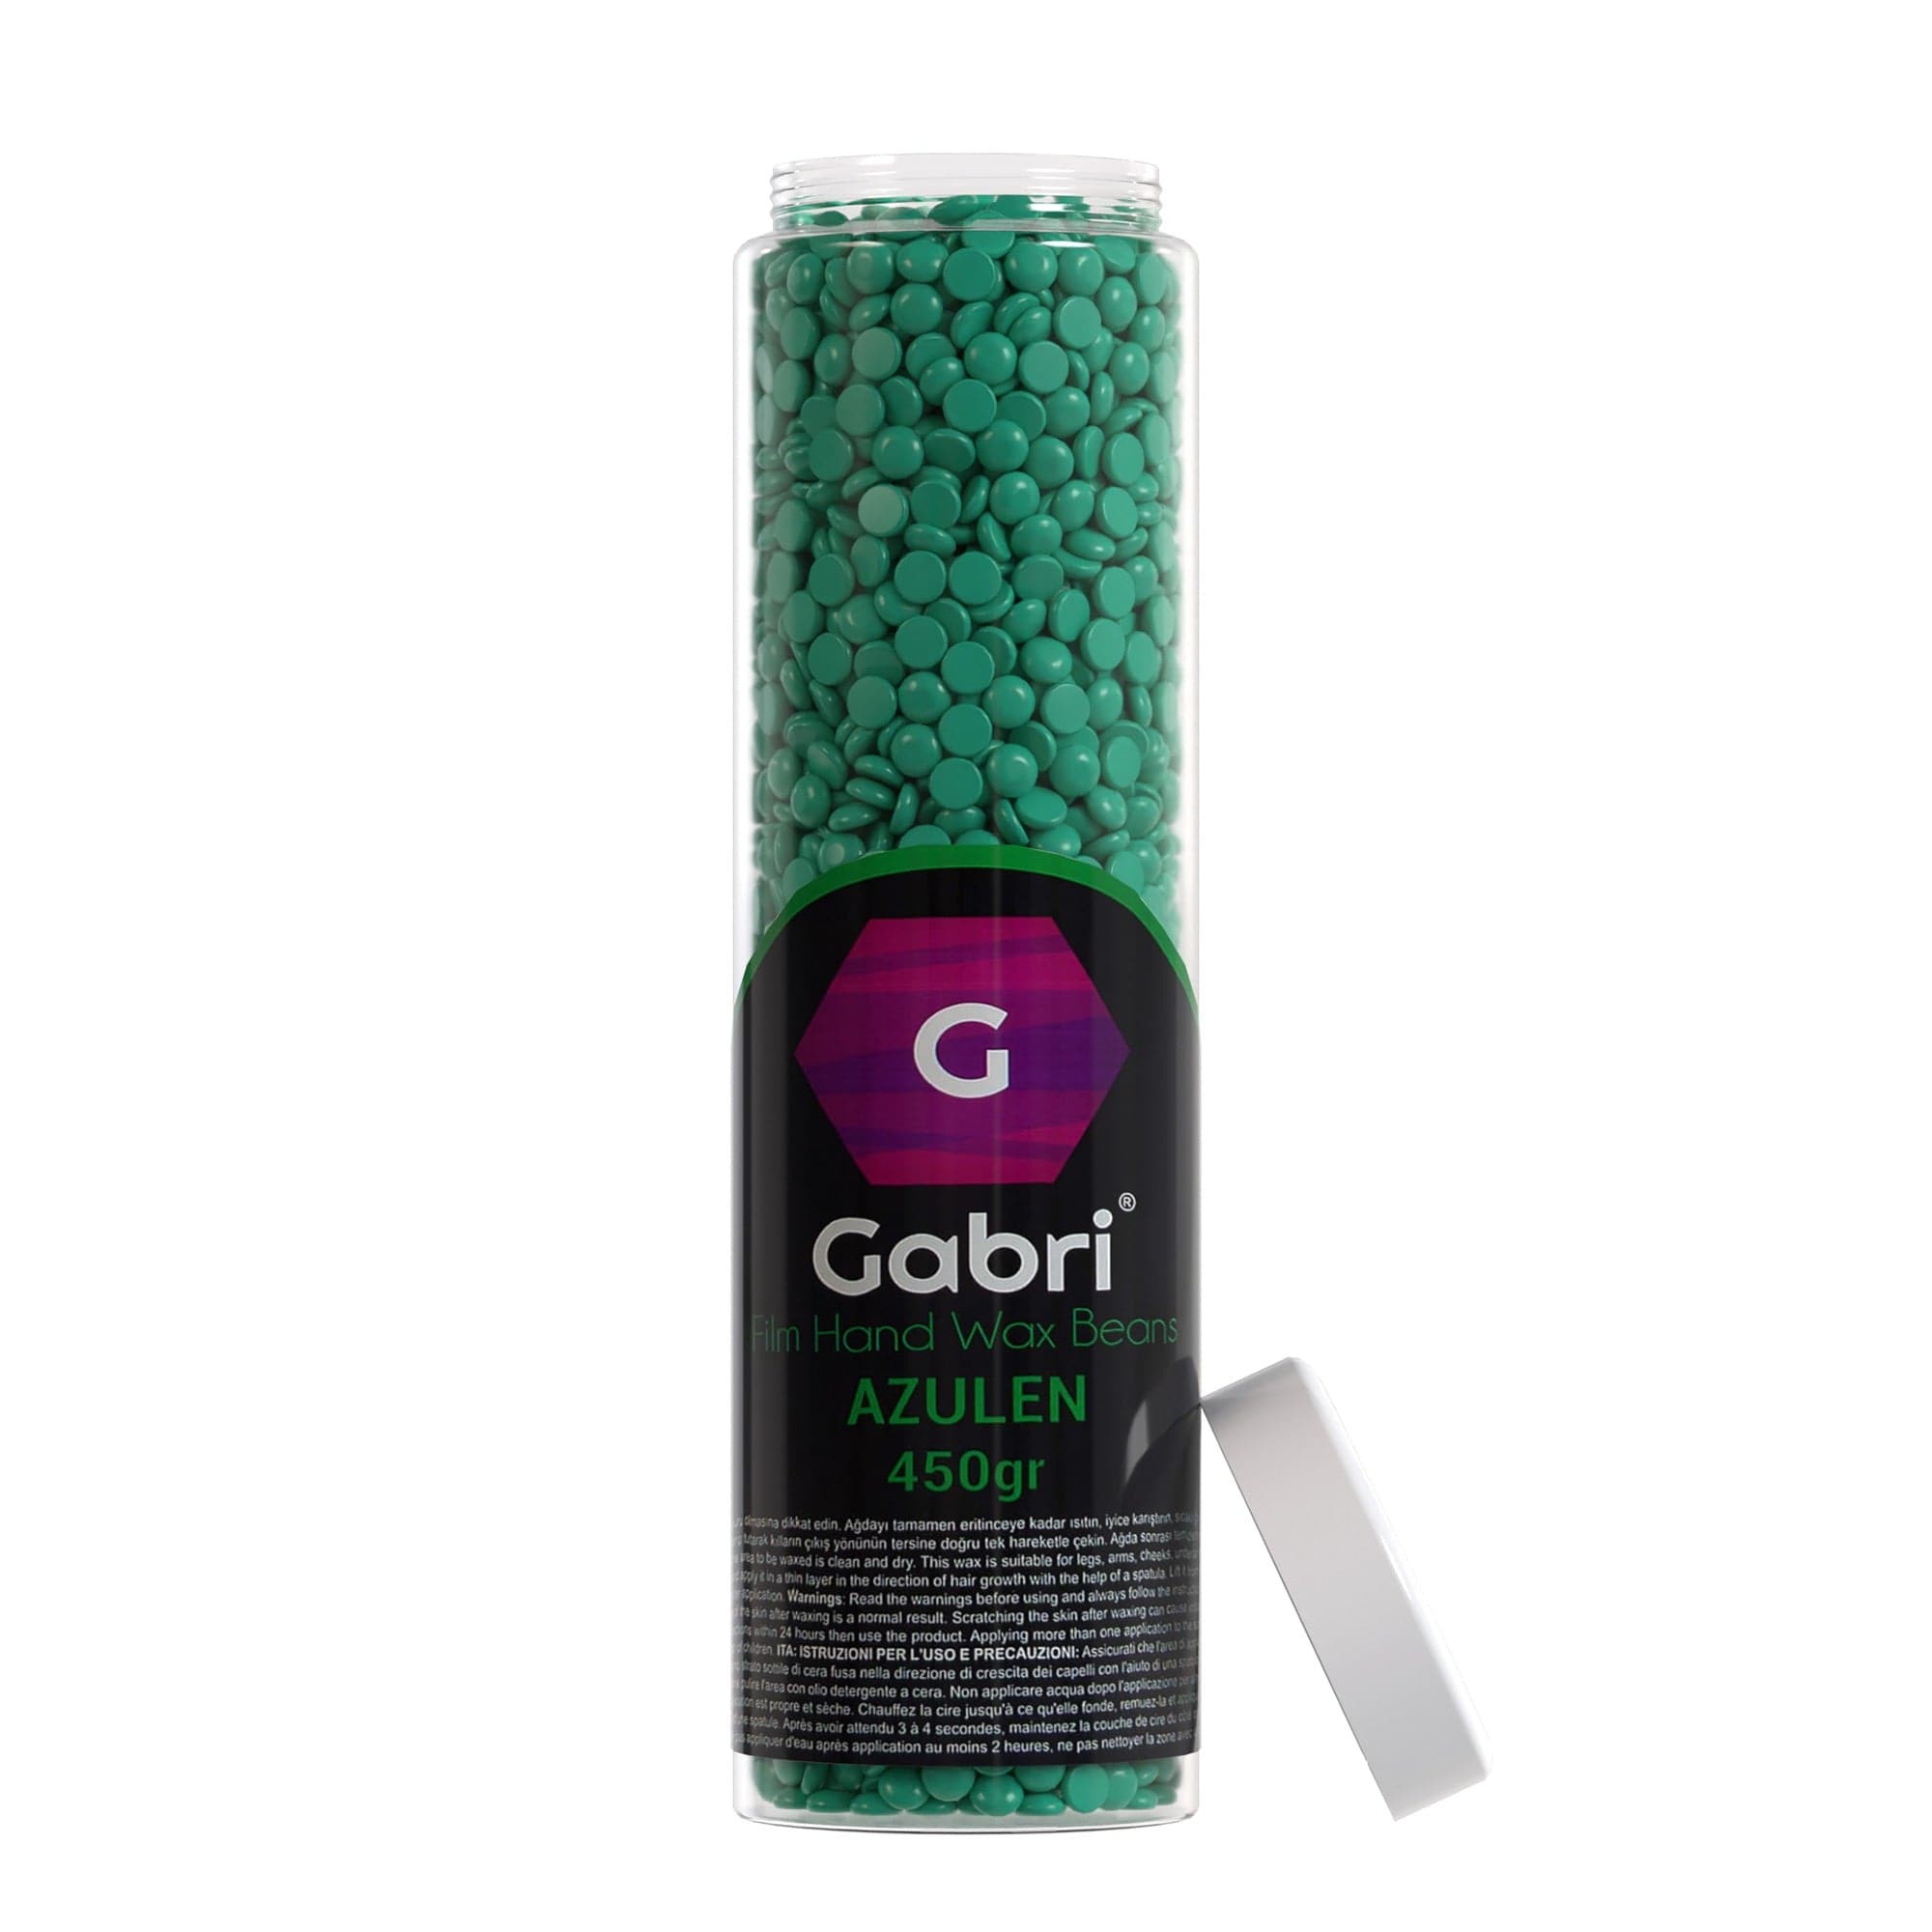 Gabri Professional - Hair Removal Hot Wax Film Hand Mask Beans Azulen 450g